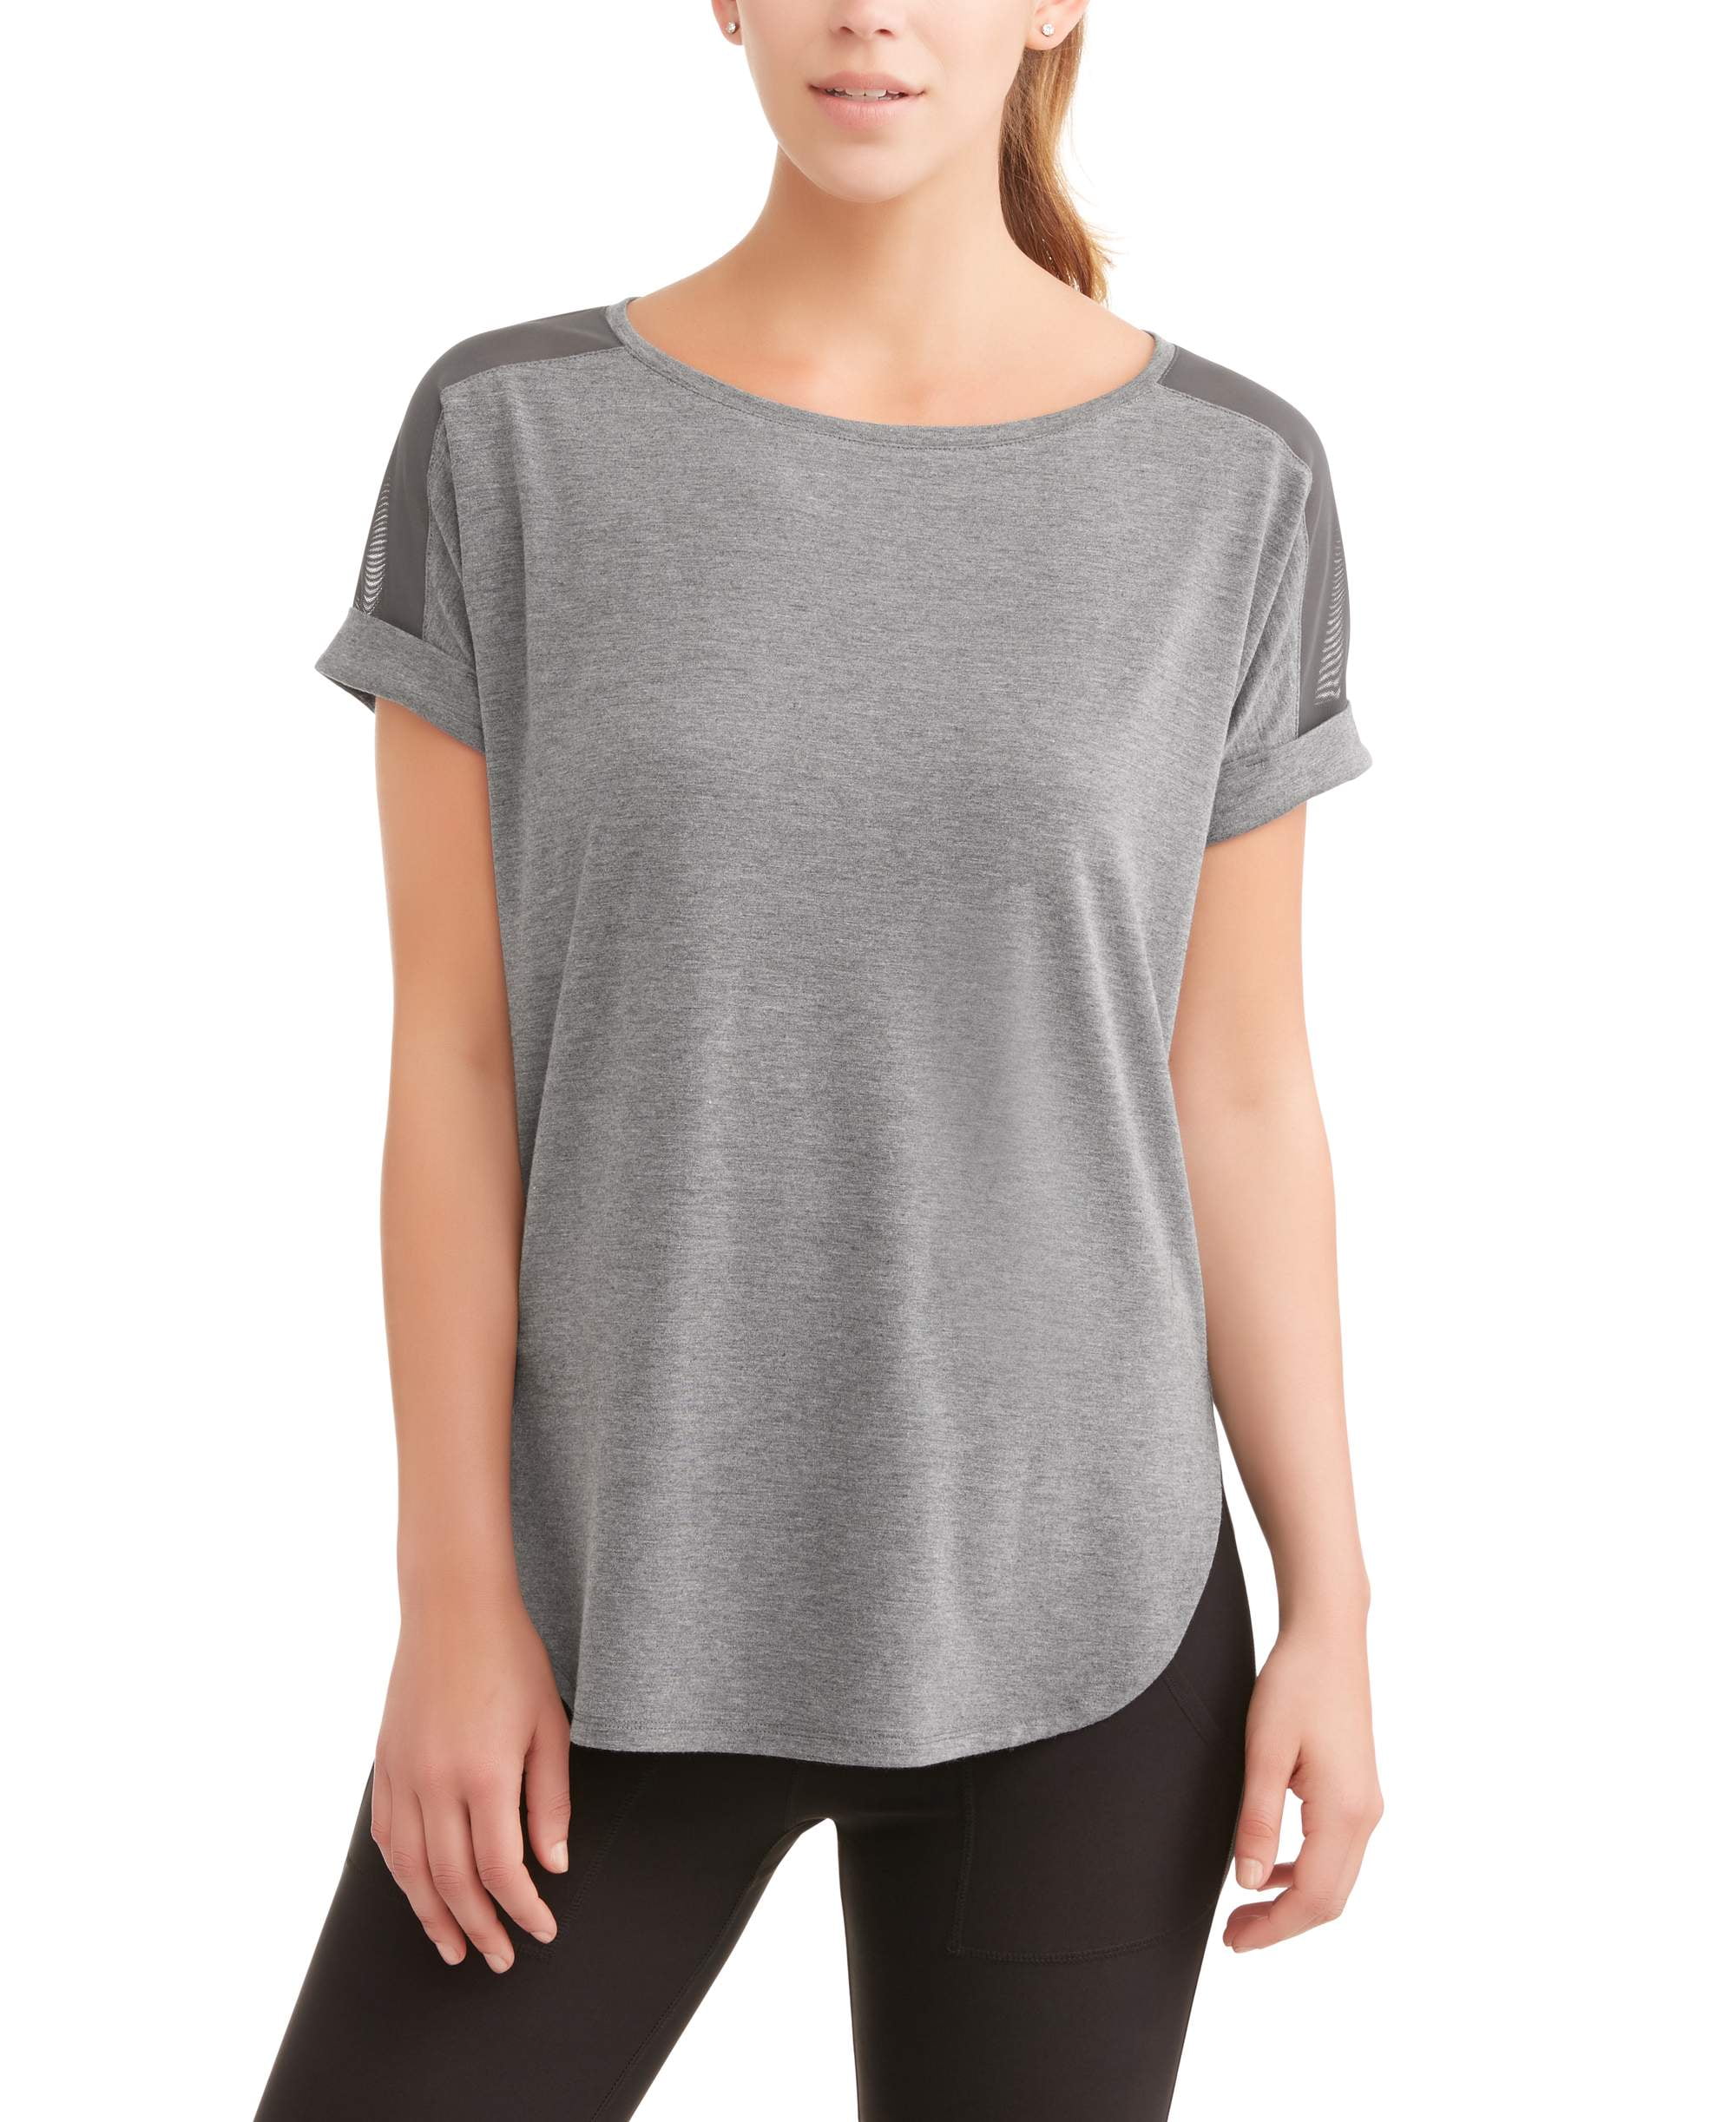 Women's Active Short Sleeve Crewneck T-Shirt With Mesh Insert - Walmart.com